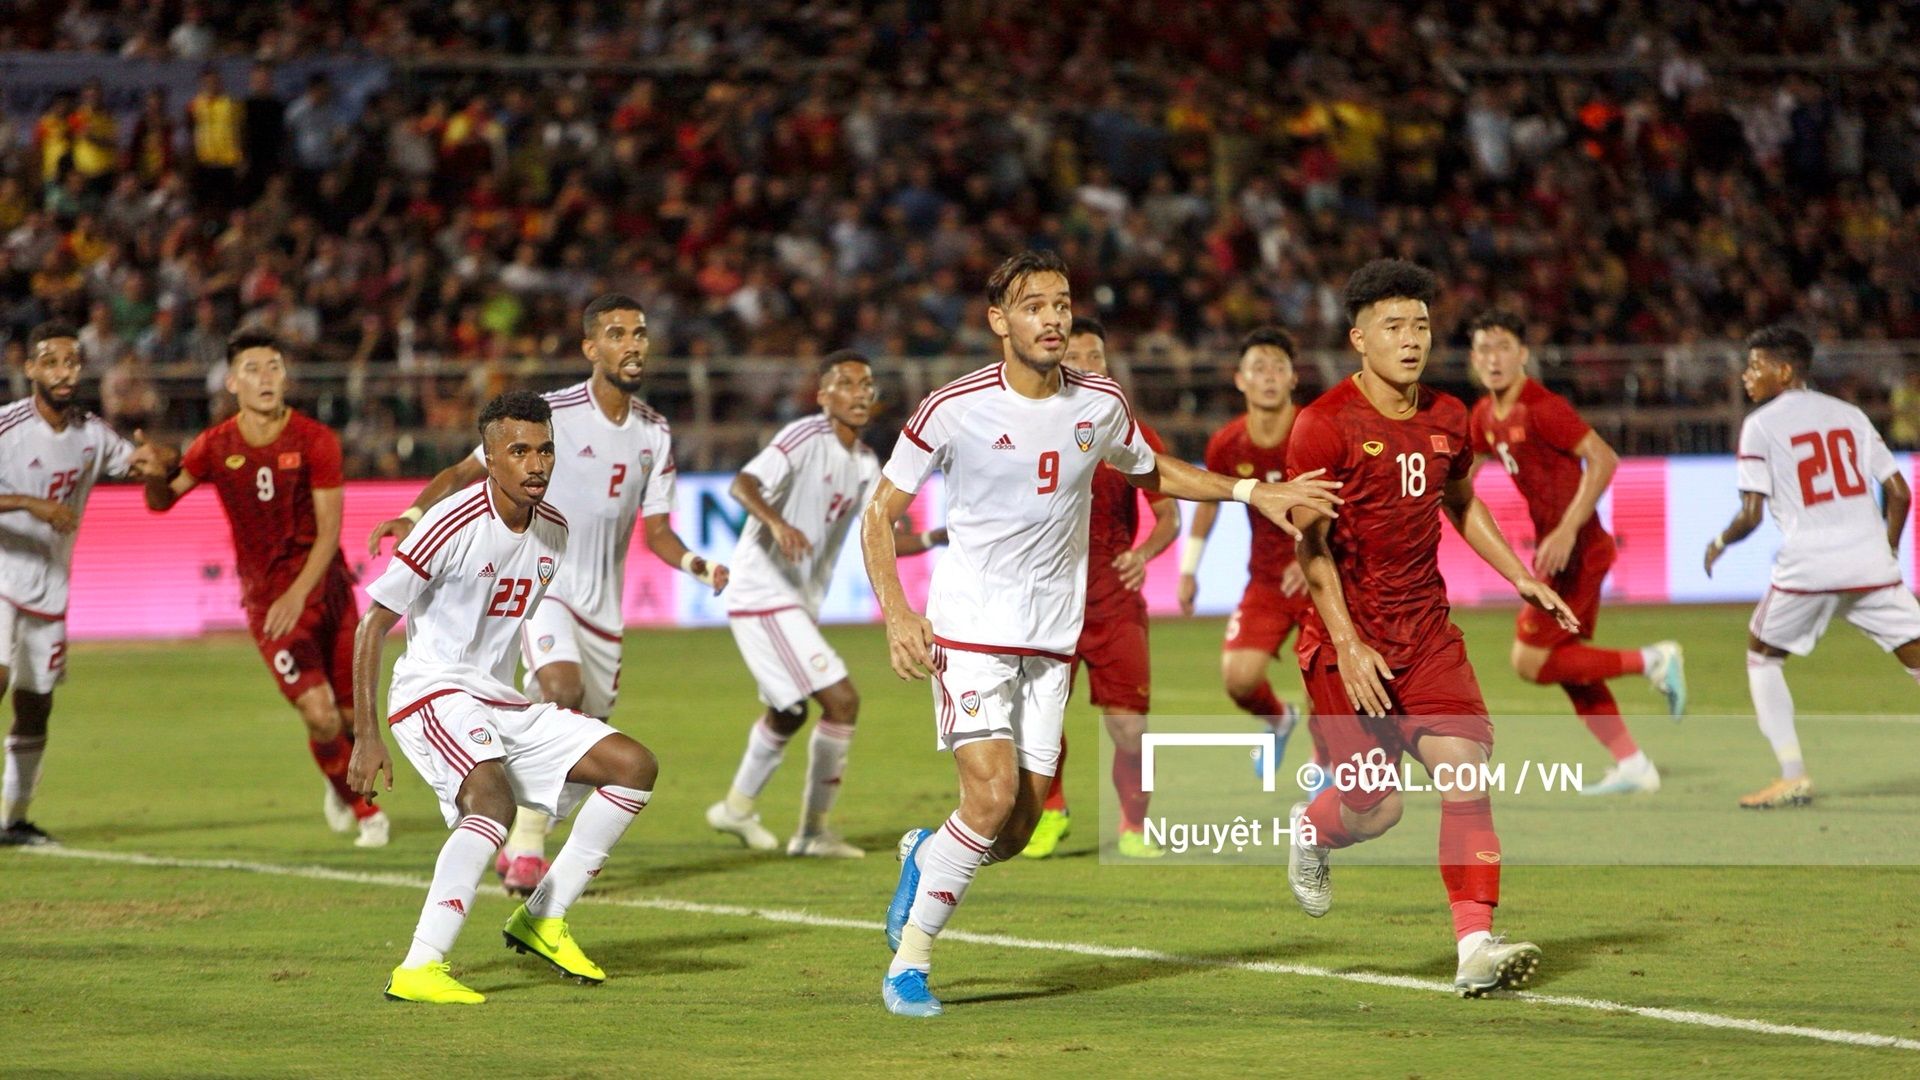 Ha Duc Chinh | U22 Vietnam vs U22 UAE | Friendly Match | 13 October 2019